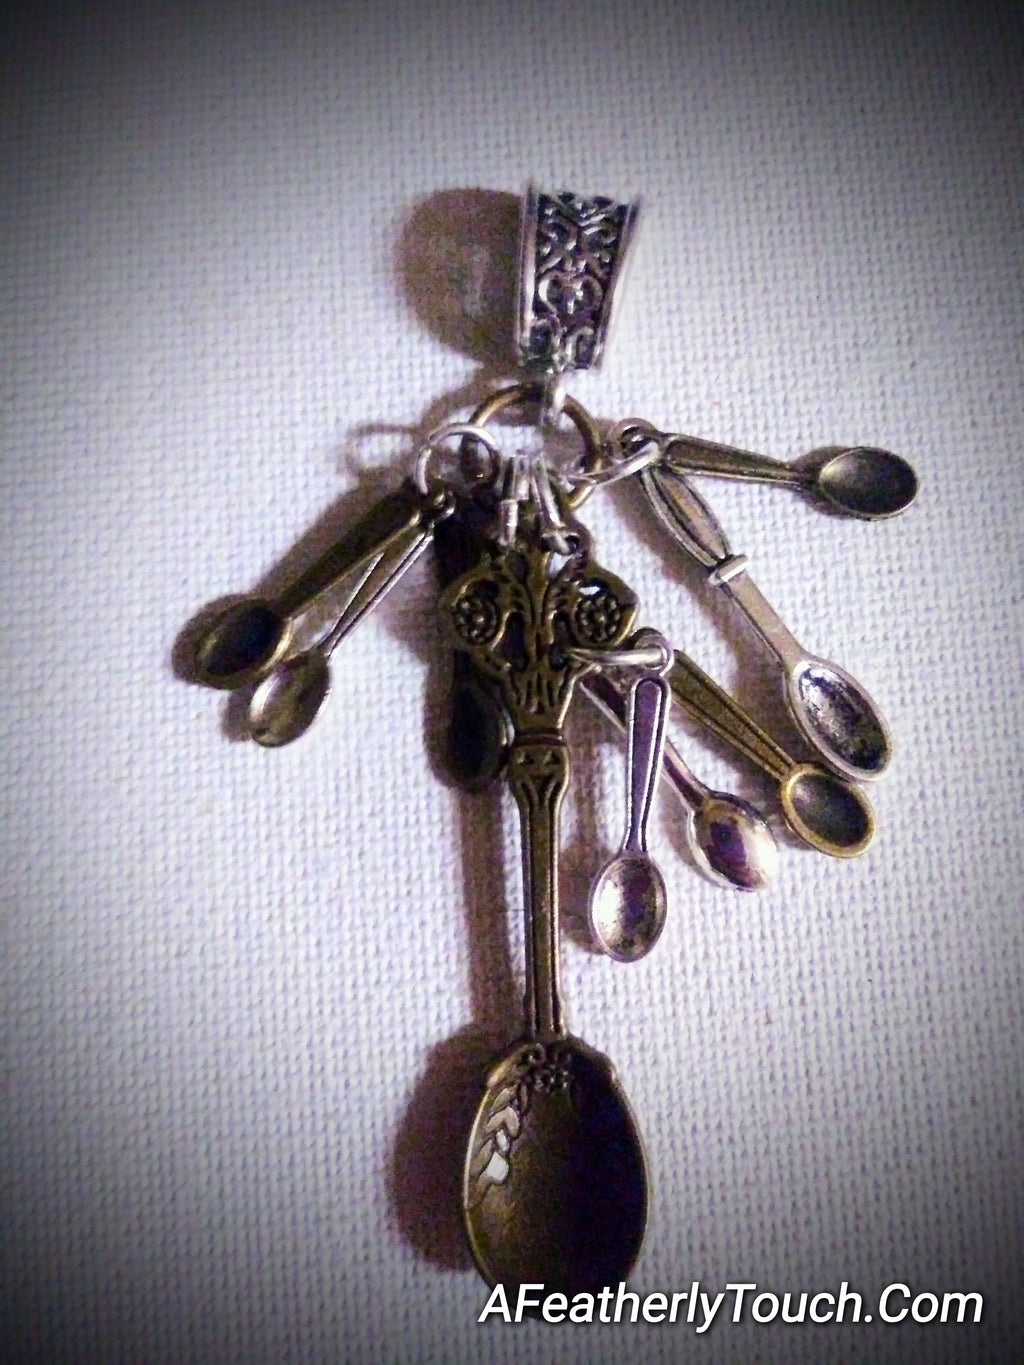 Spoon necklace pendant chronic illness and pain awareness symbol